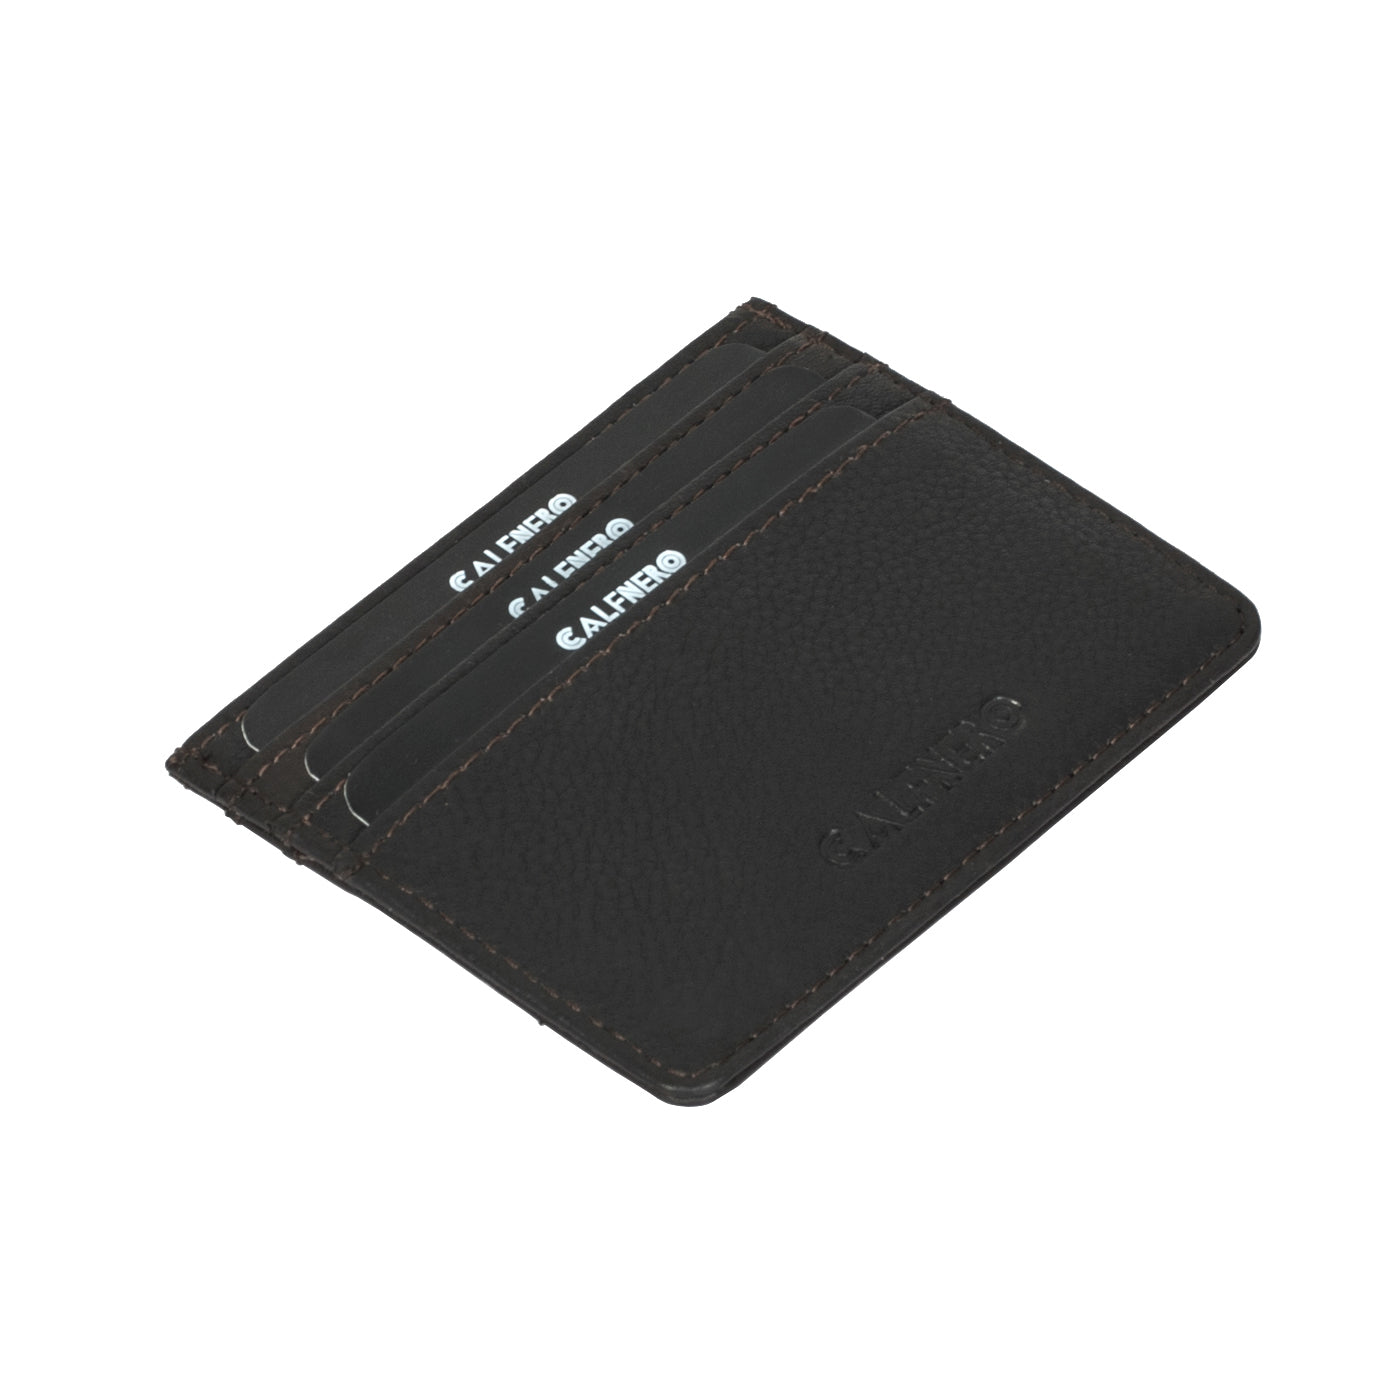 Calfnero Genuine Leather Card Case (1044-Brown)